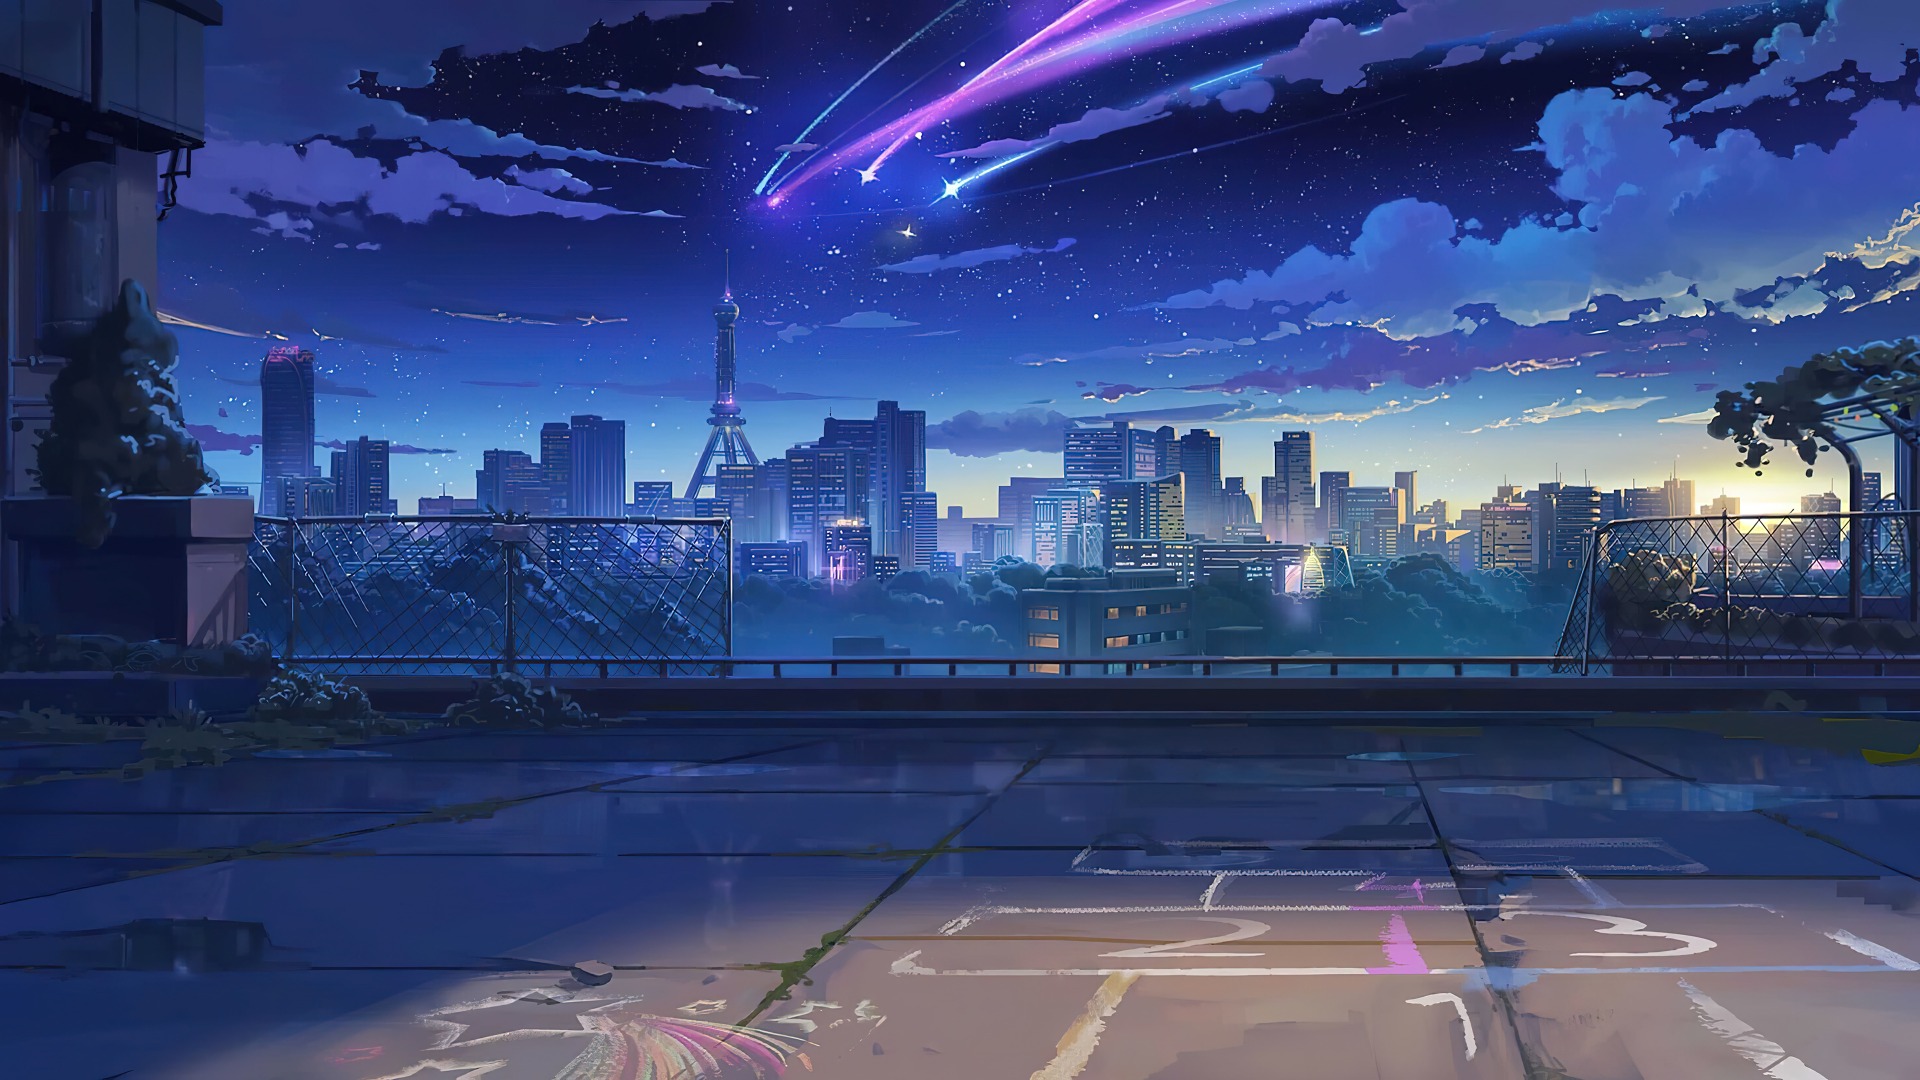 Artwork Digital Art Night Stars City Building Shooting Stars Clouds Comet Anime City Anime 1920x1080